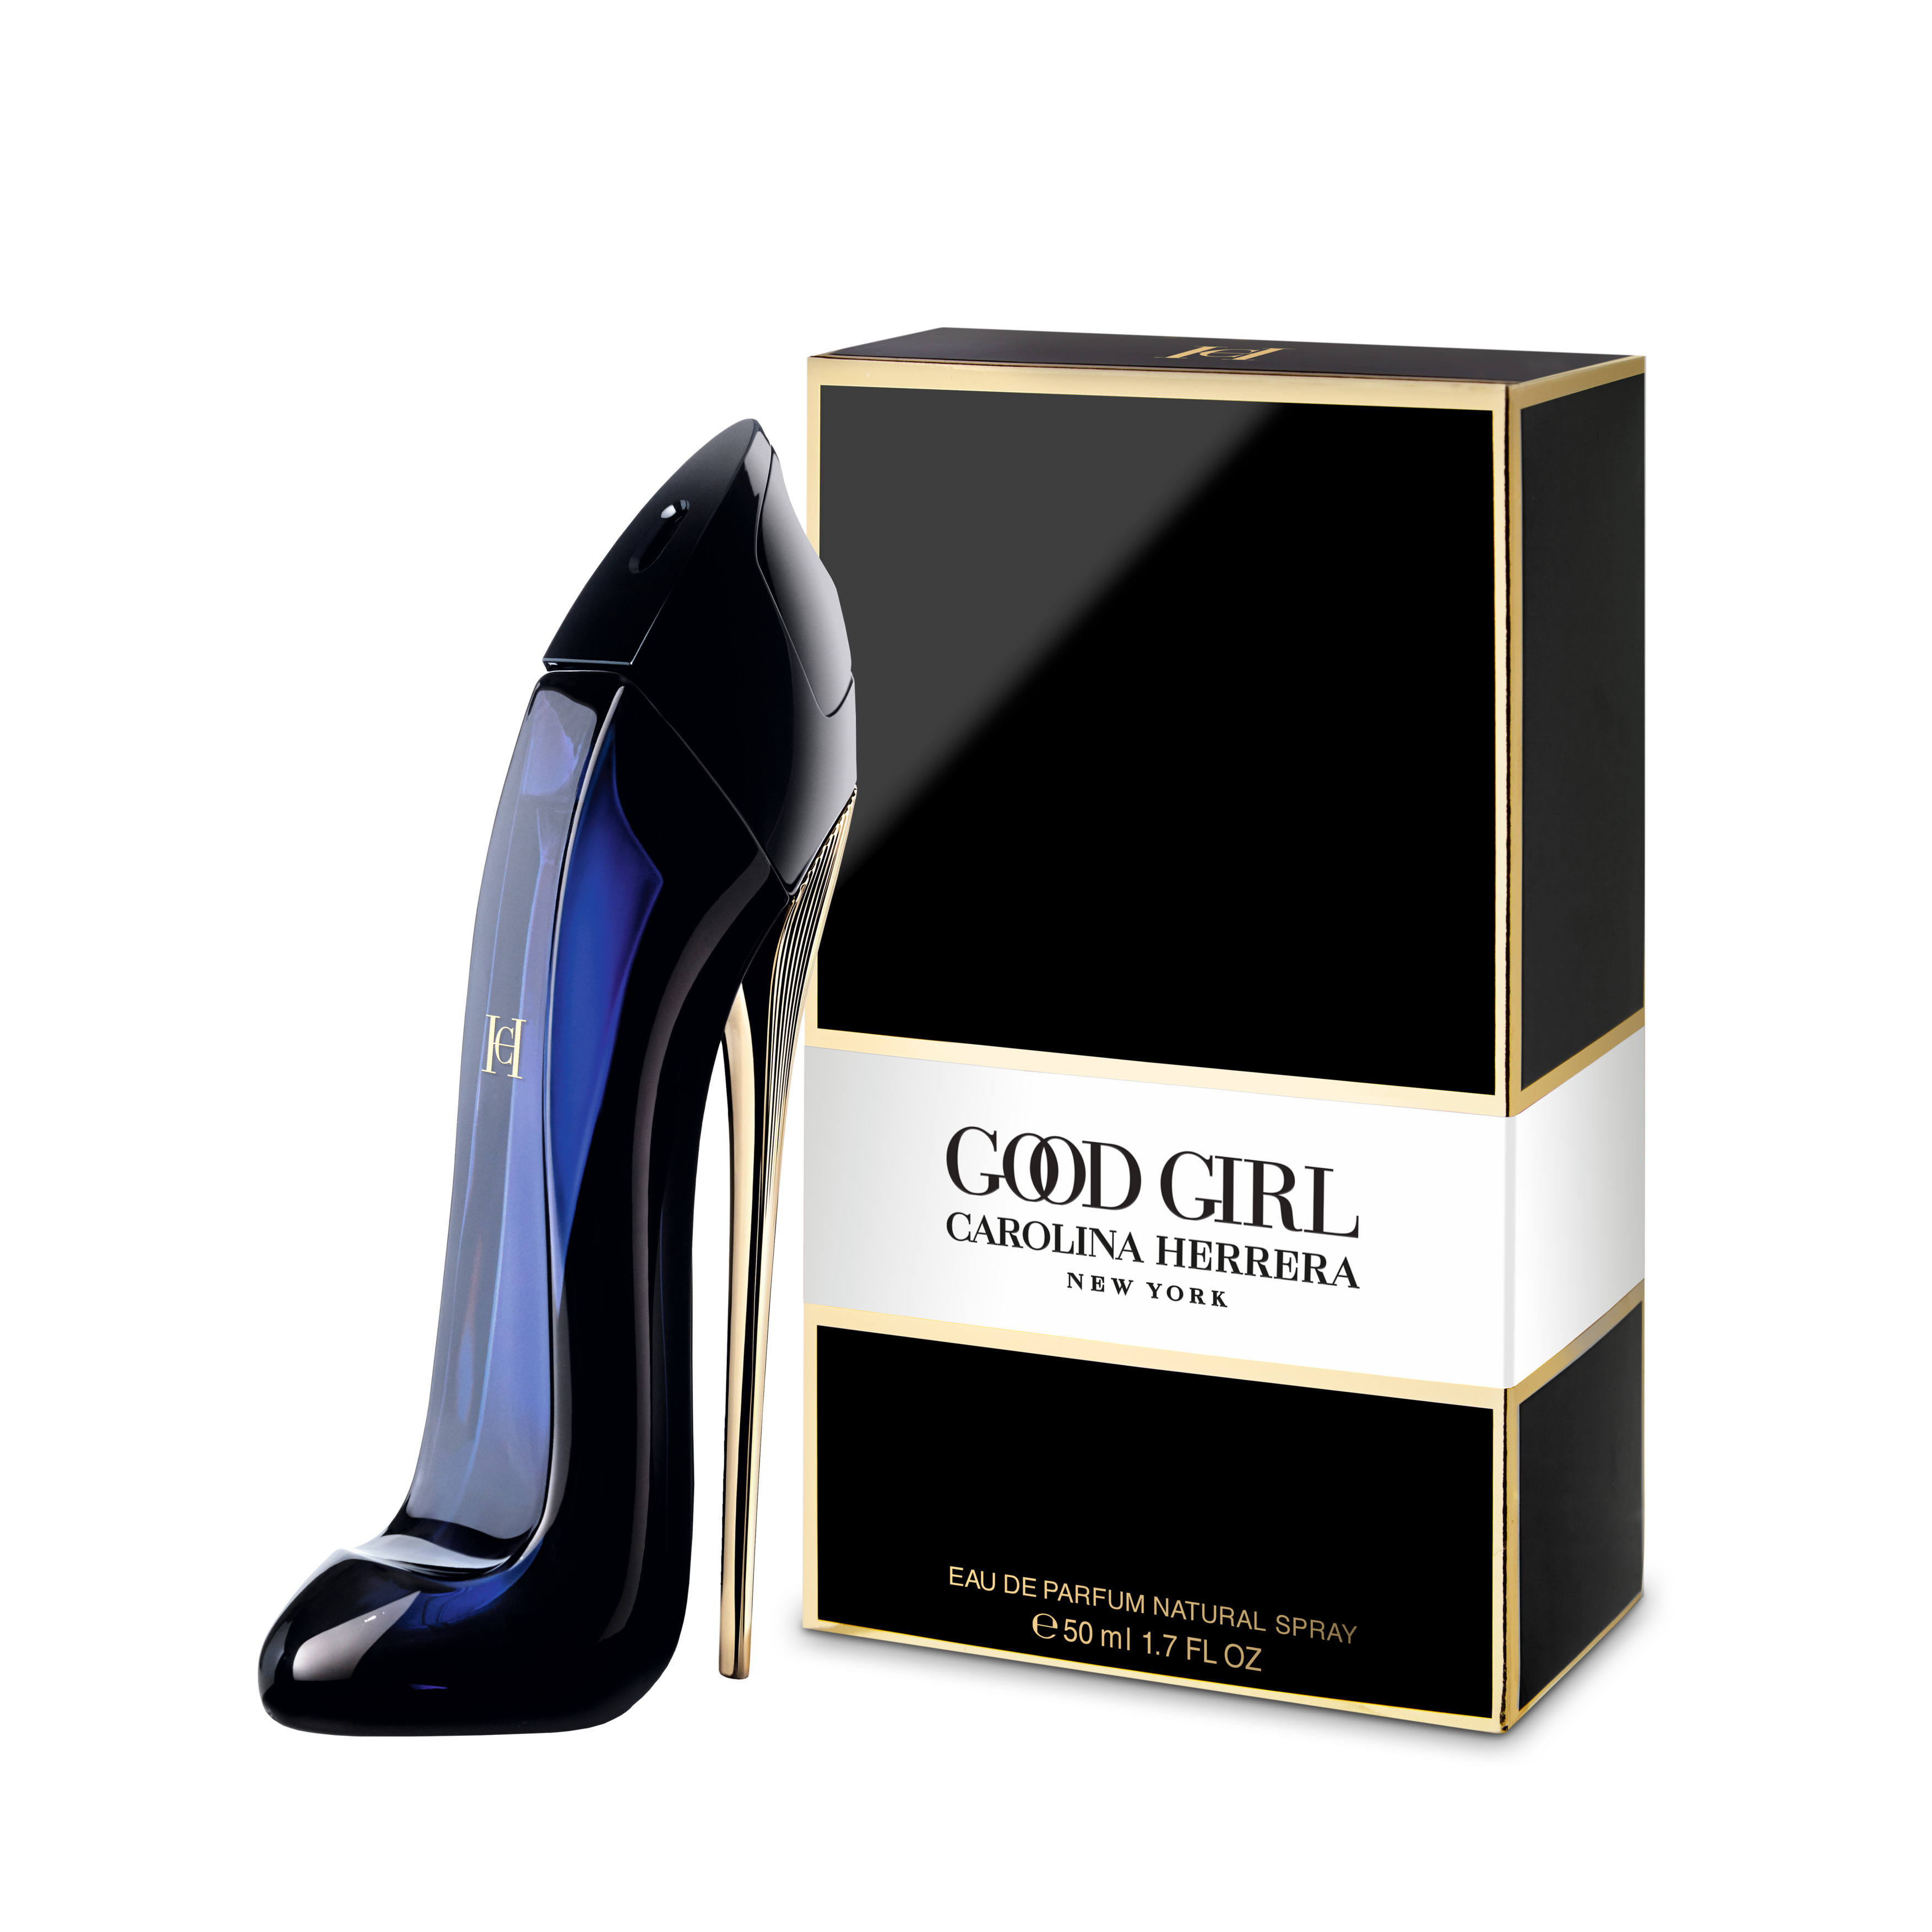 Good Girl Eau De Parfum 50 ml